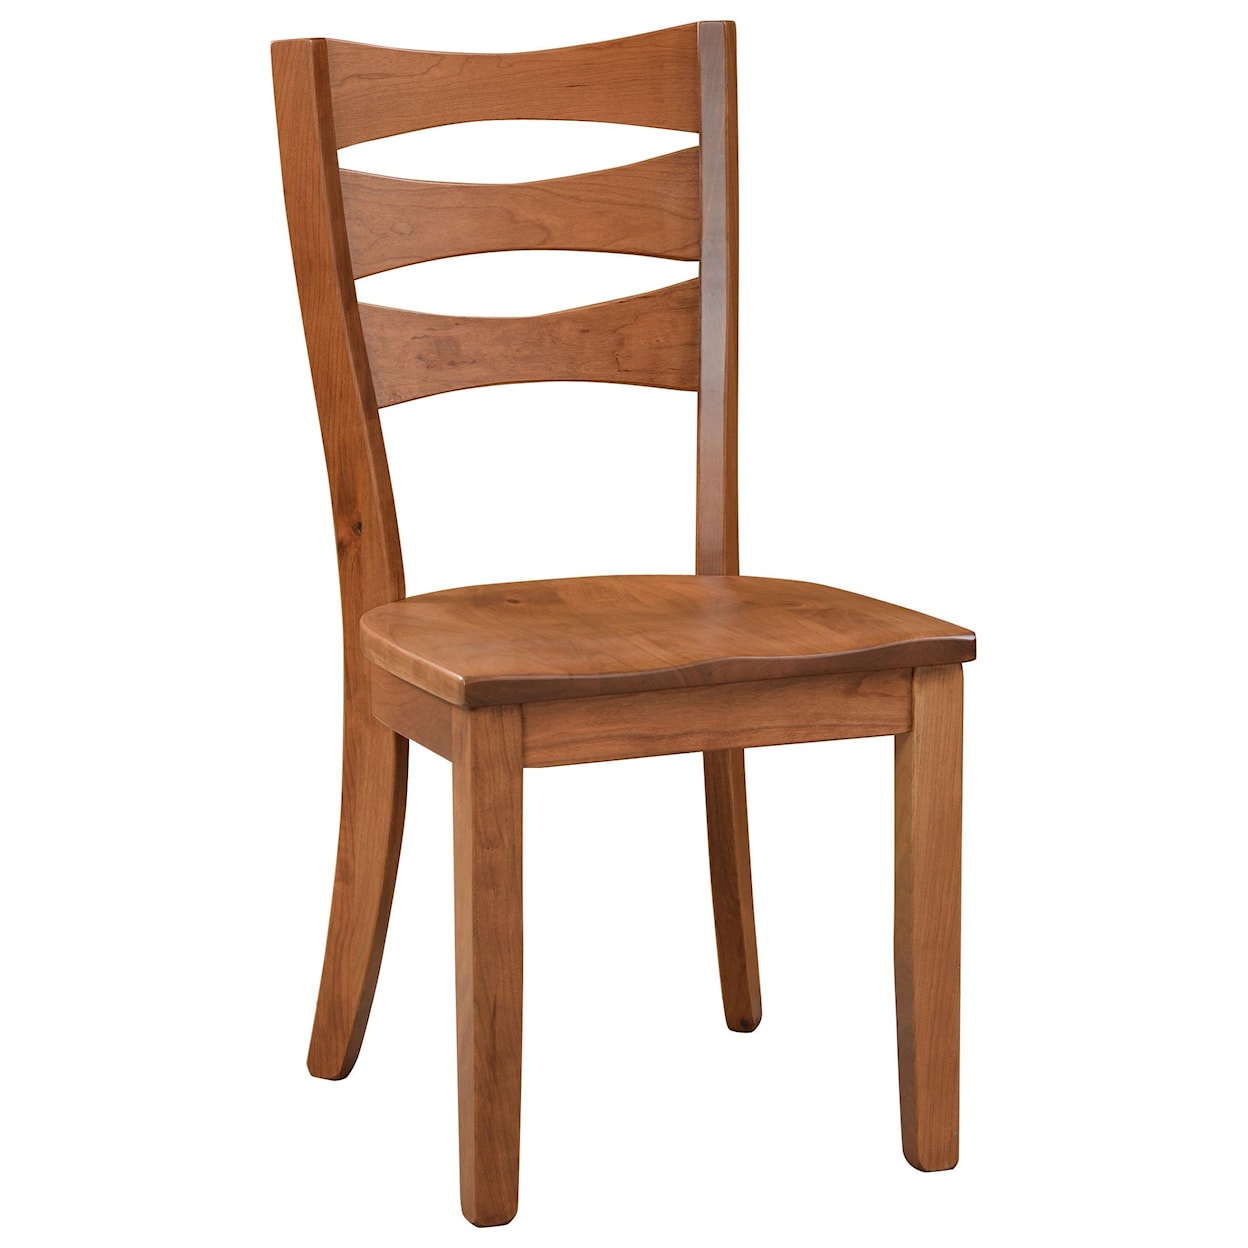 Wengerd Wood Products Sierra Side Chair